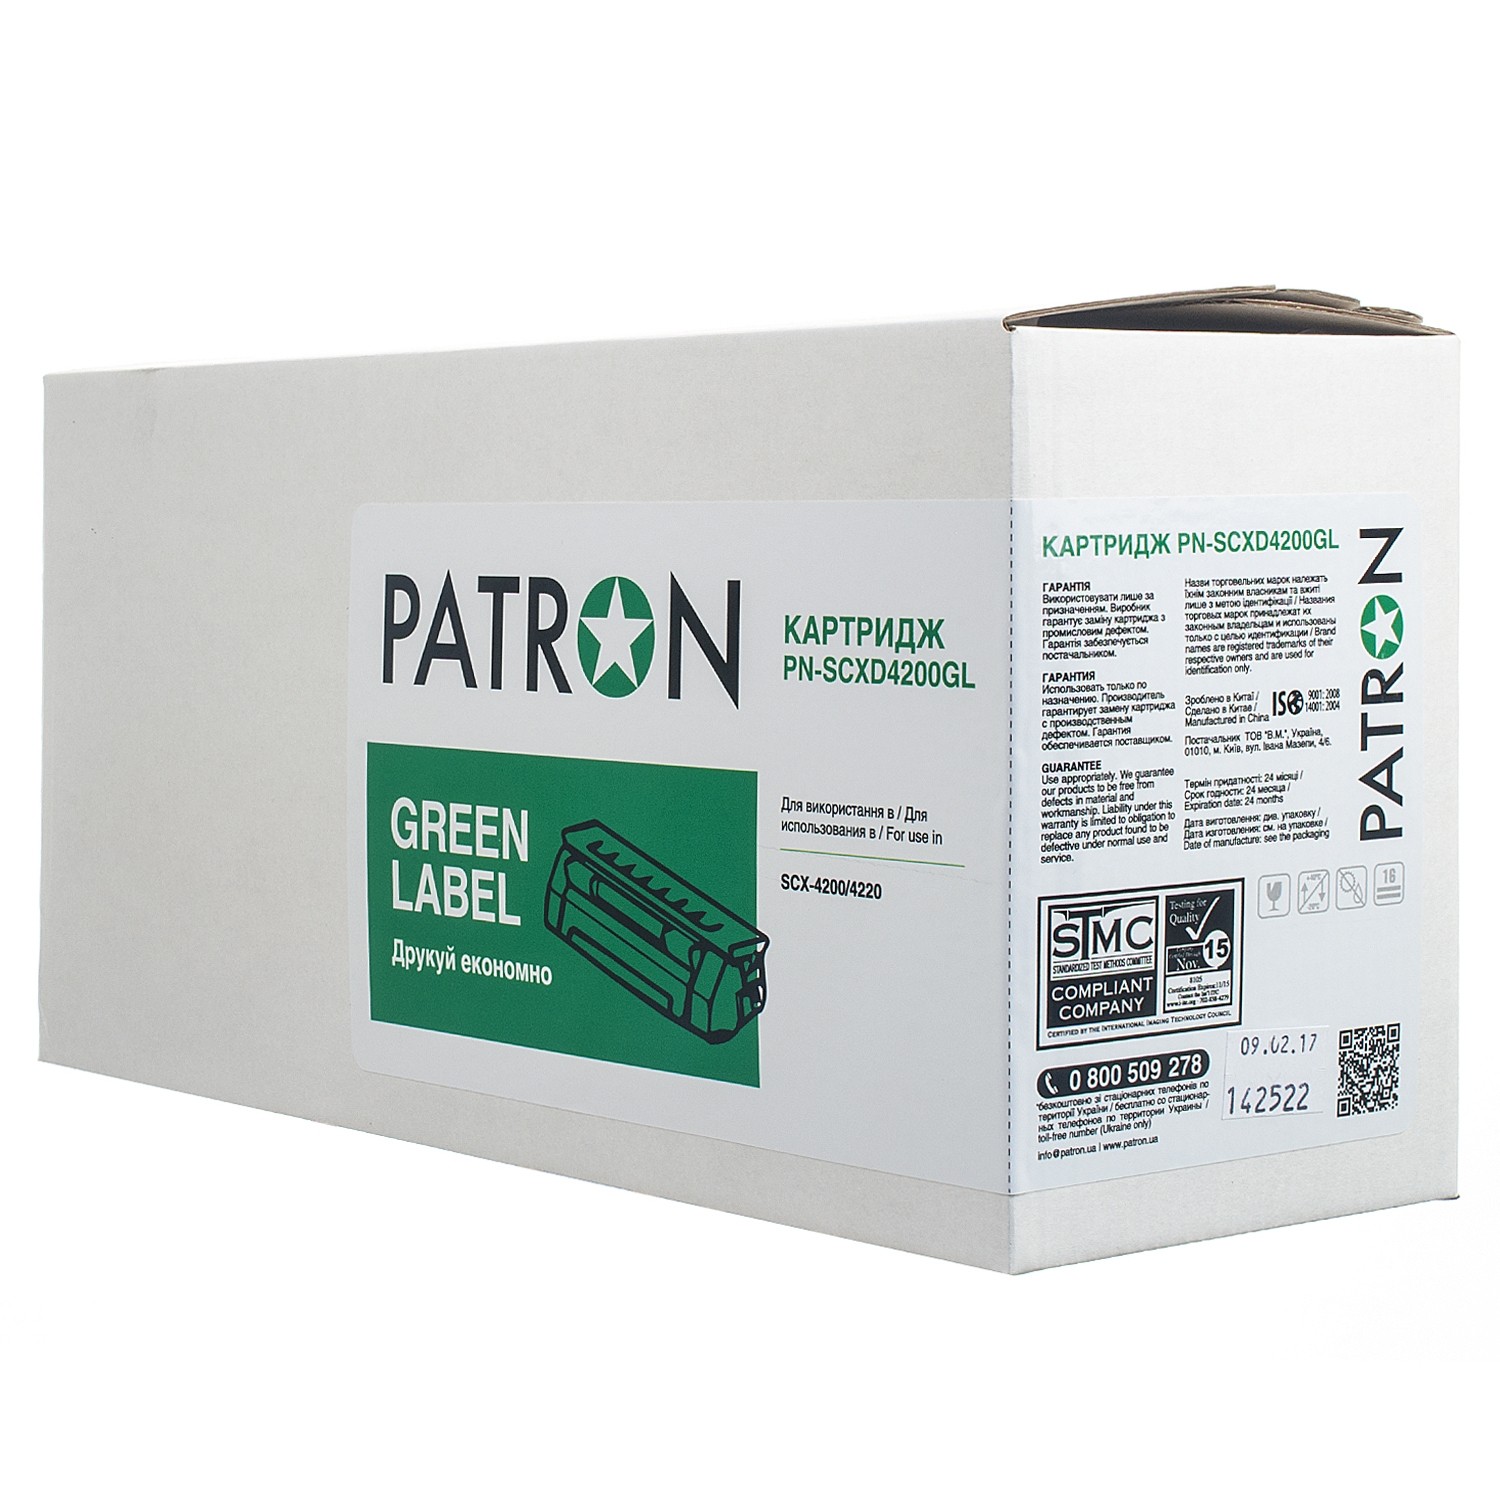 КАРТРИДЖ SAMSUNG SCX-D4200A (PN-SCXD4200GL) PATRON GREEN Label